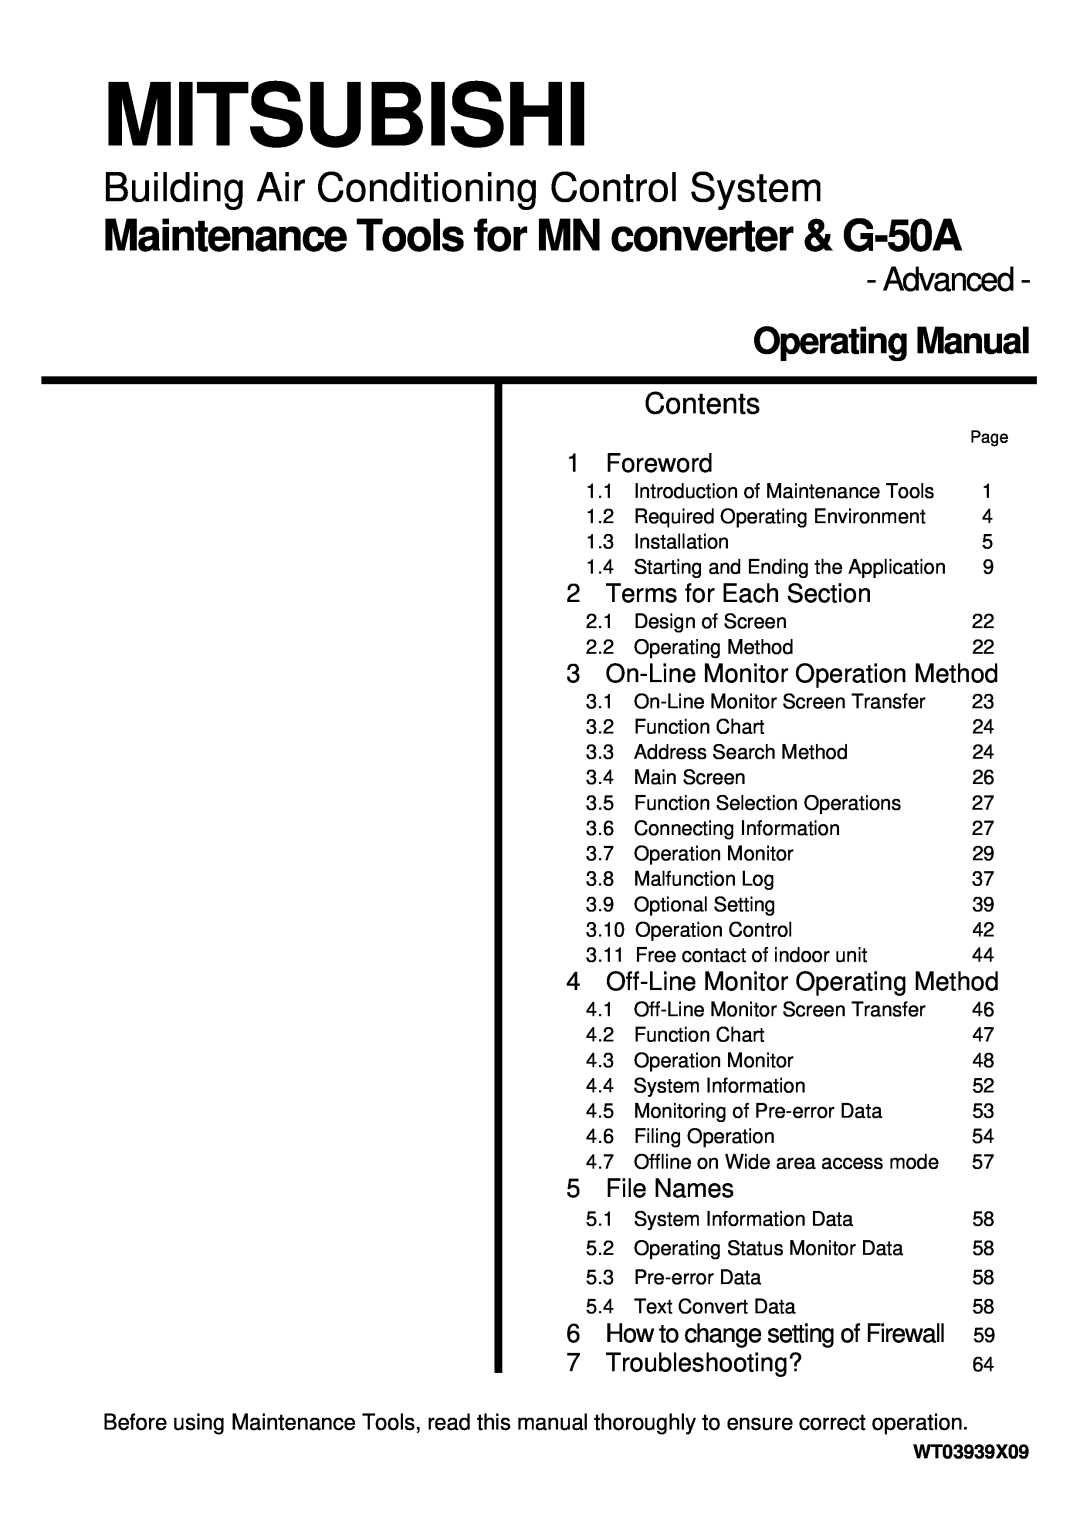 Mitsubishi MN Converter manual Operating Manual, Mitsubishi, Maintenance Tools for MN converter & G-50A, Advanced 